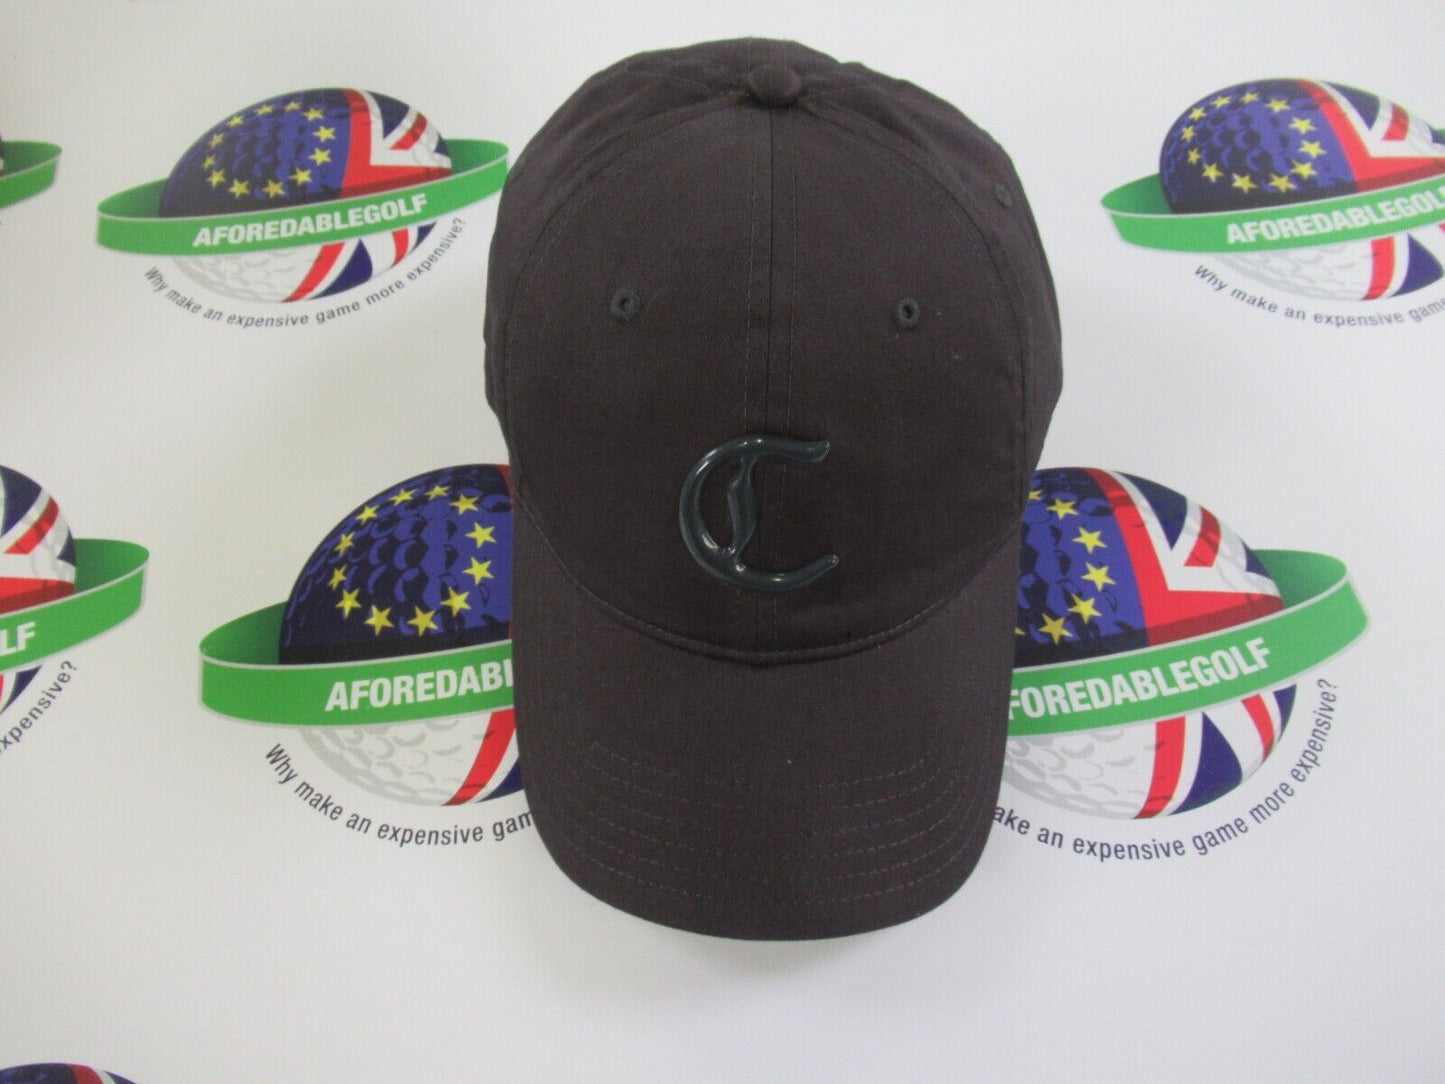 callaway golf collection charcoal adjustable golf cap